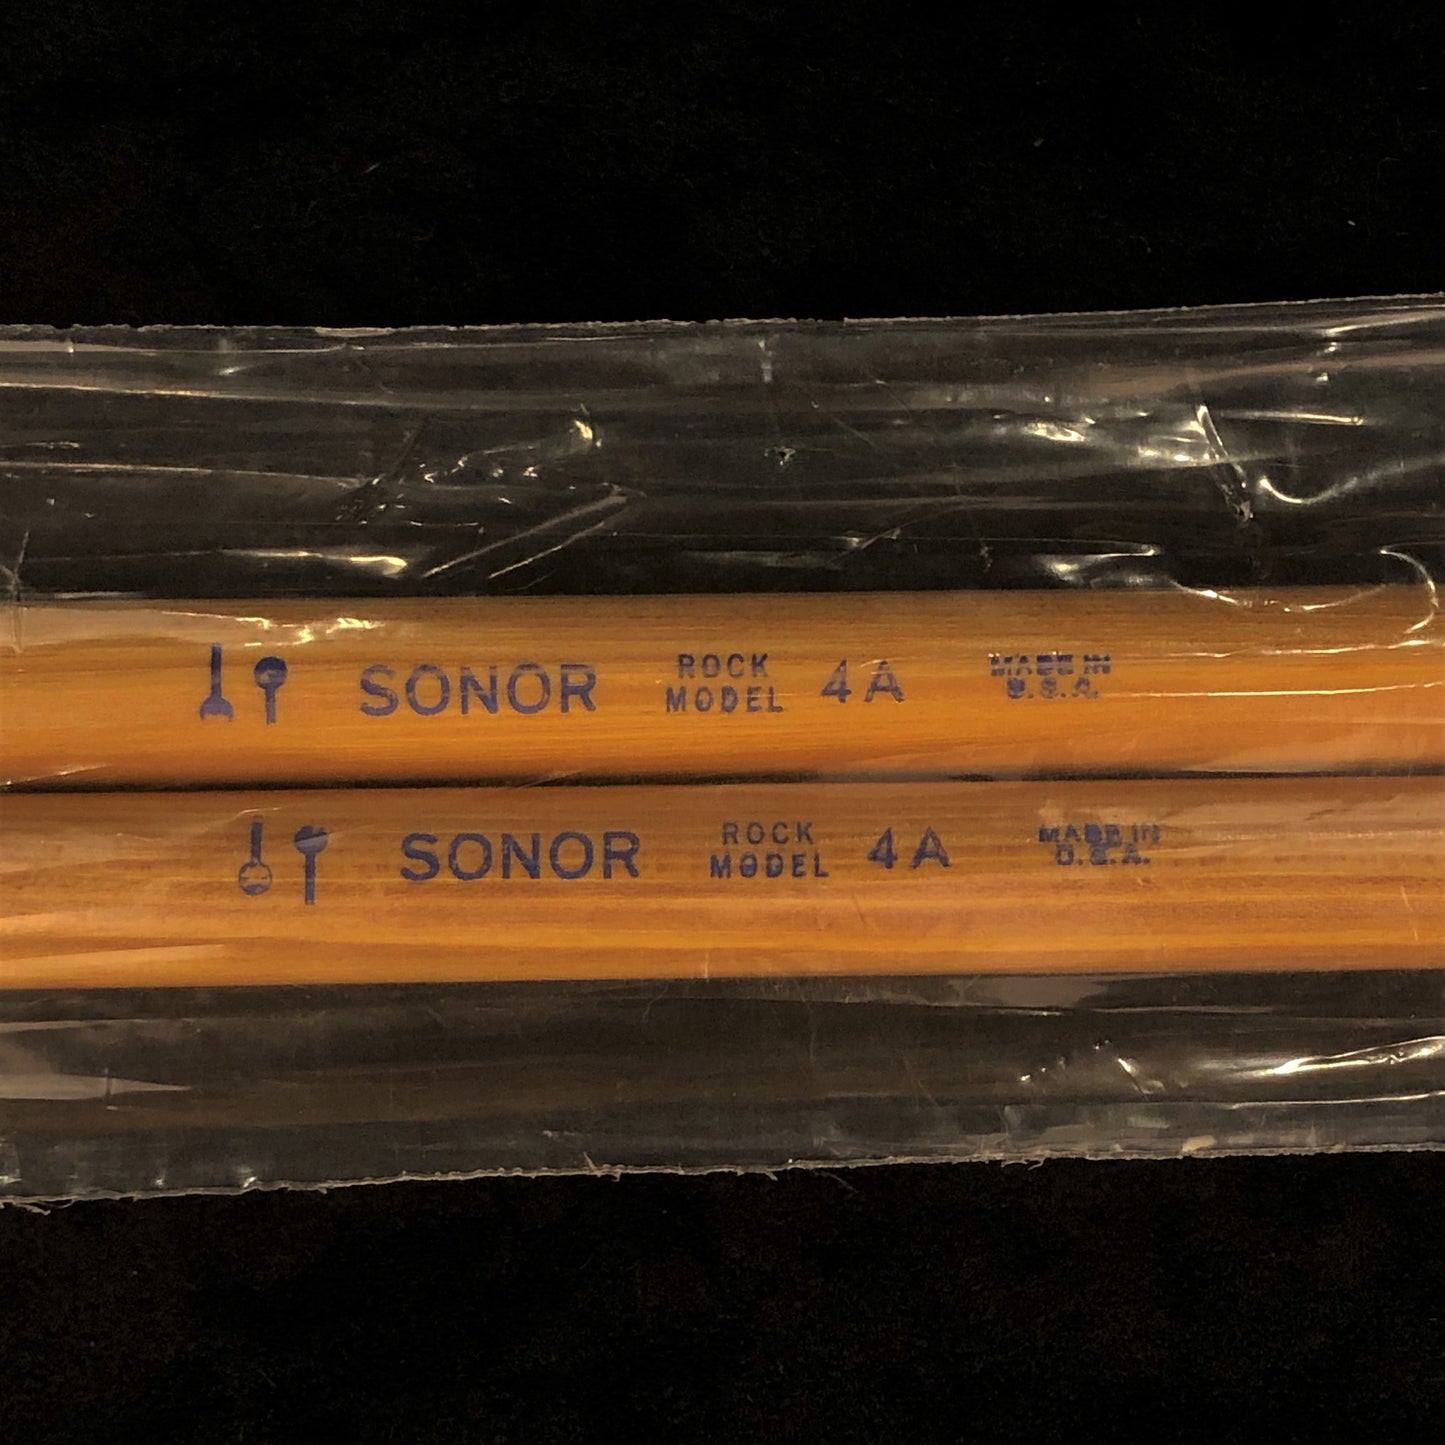 Vintage N.O.S. Sonor Rock Model 4A Wood Tip Drum Sticks w/ Original Bag - Made in U.S.A.